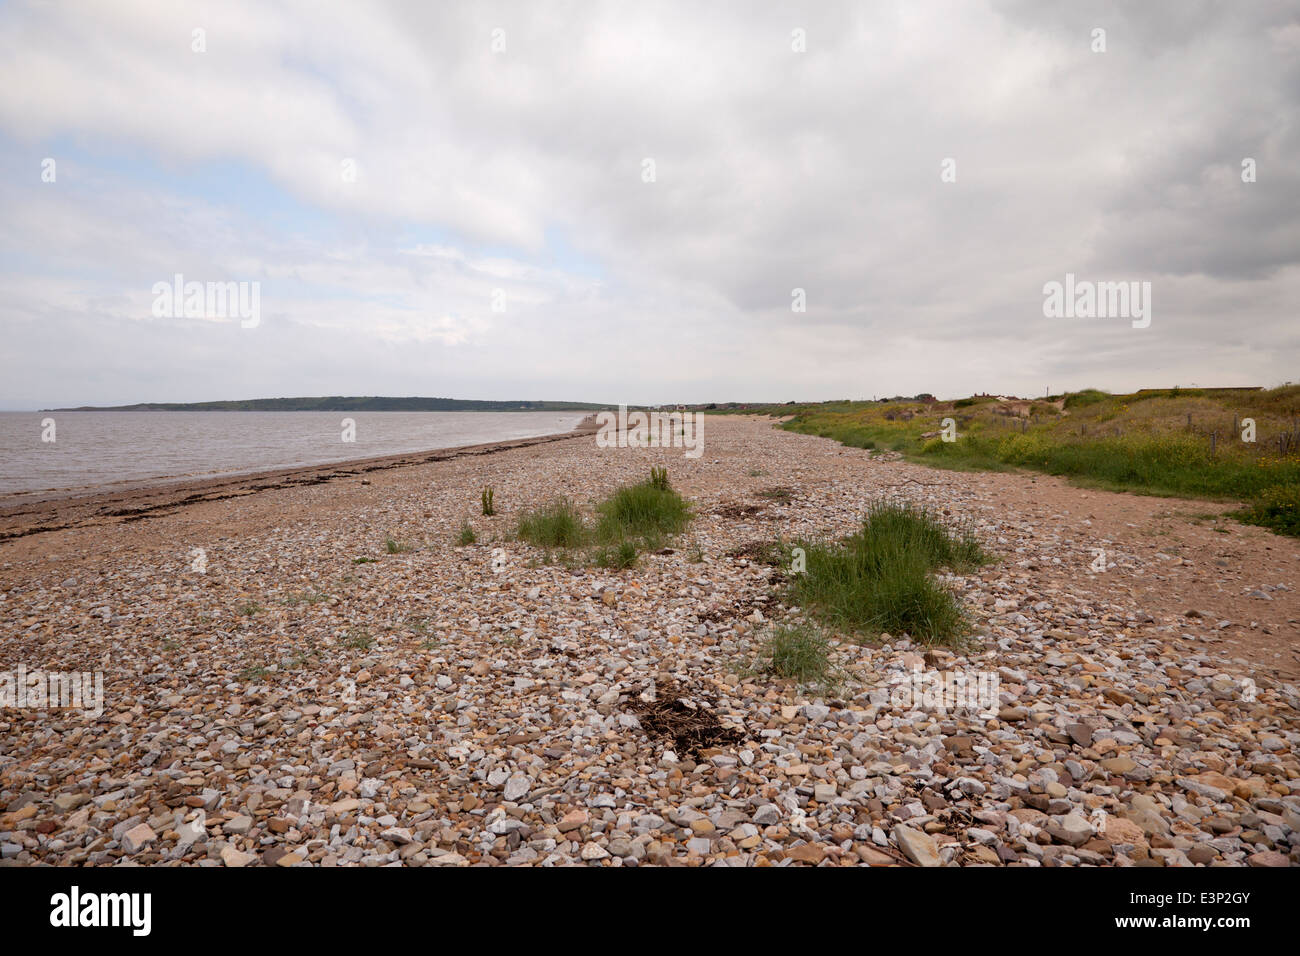 Sand Bay, Kewstoke, Weston-Super-Mare, Somerset, England, UK Stock Photo